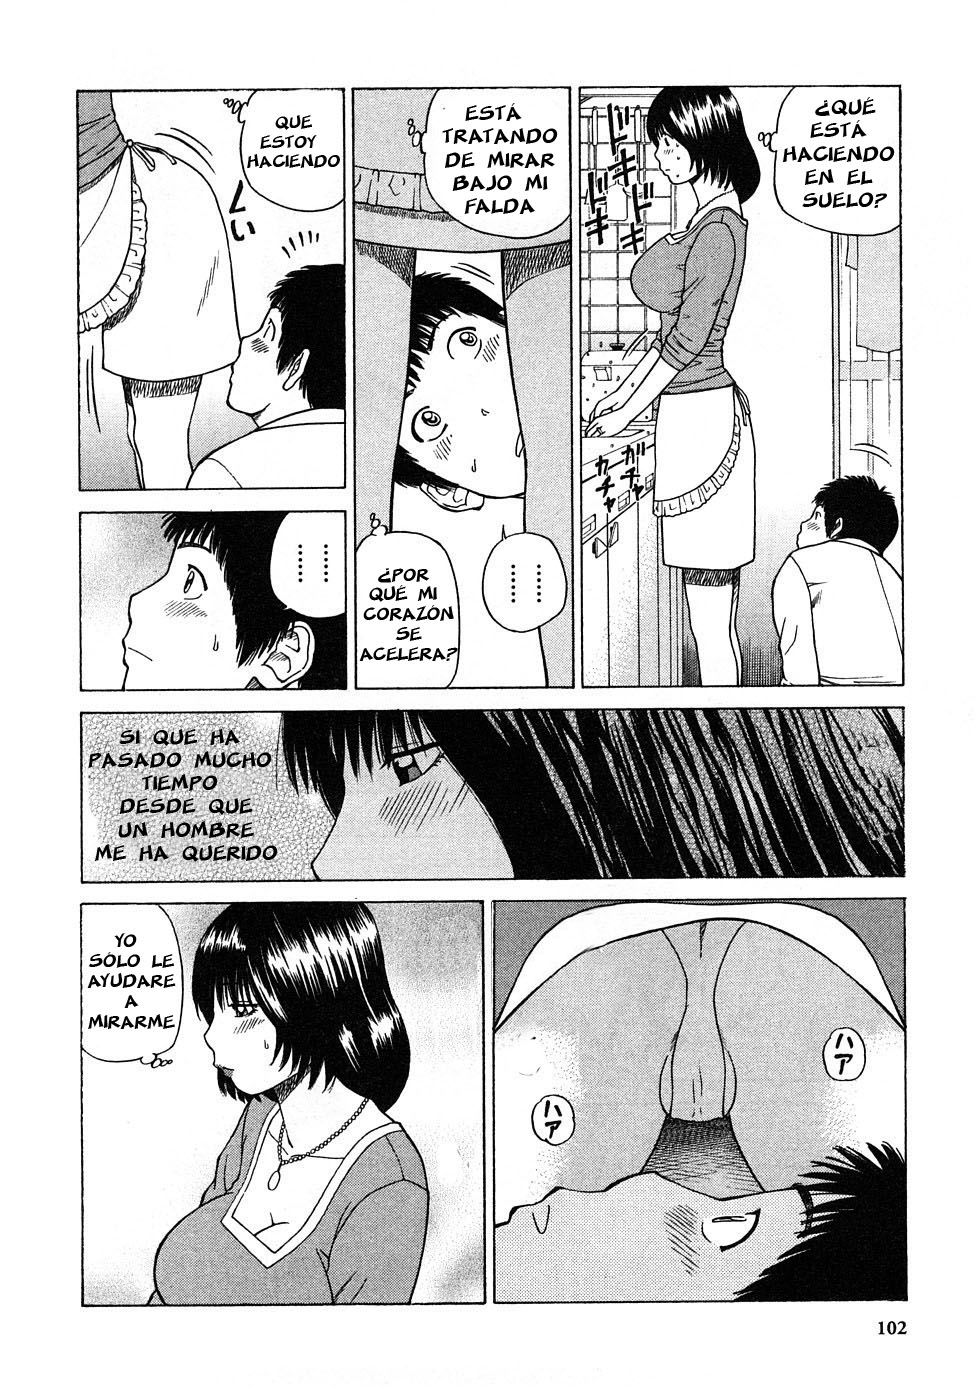 Visitando a mi Tía Caliente - 8 - Comics Porno - Hentai Manga - Cartoon XXX